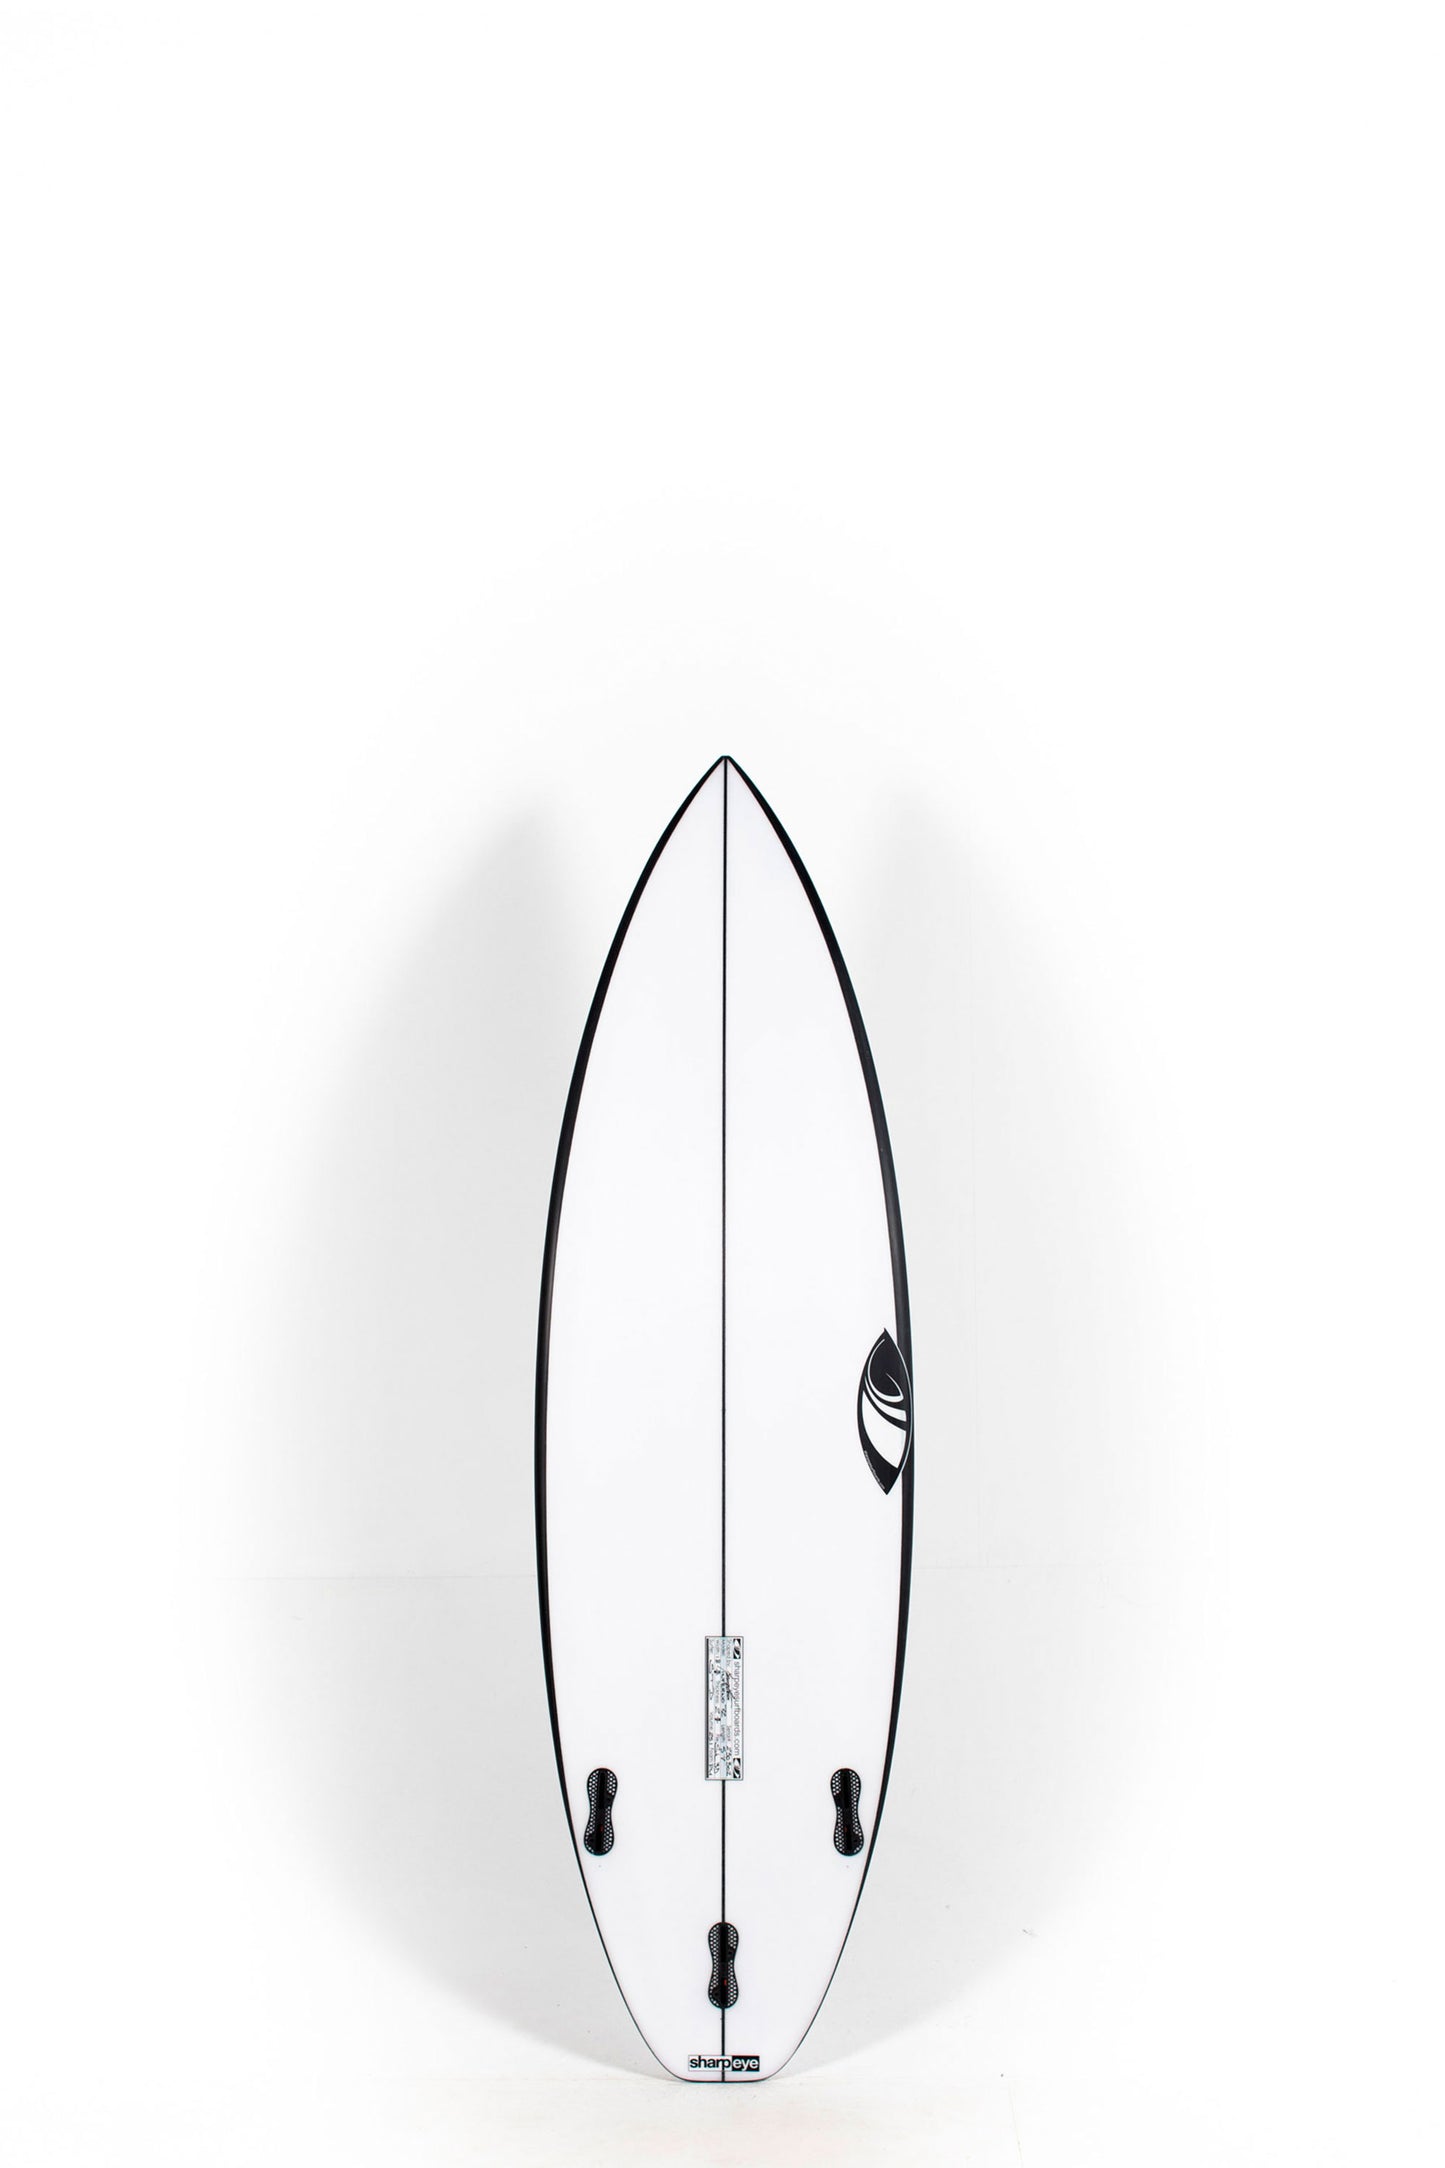 Pukas Surf Shop - Sharpeye Surfboards - INFERNO 72 by Marcio Zouvi - 5'8" x 19 x 2 7/16 - 26.7L - INFERNO